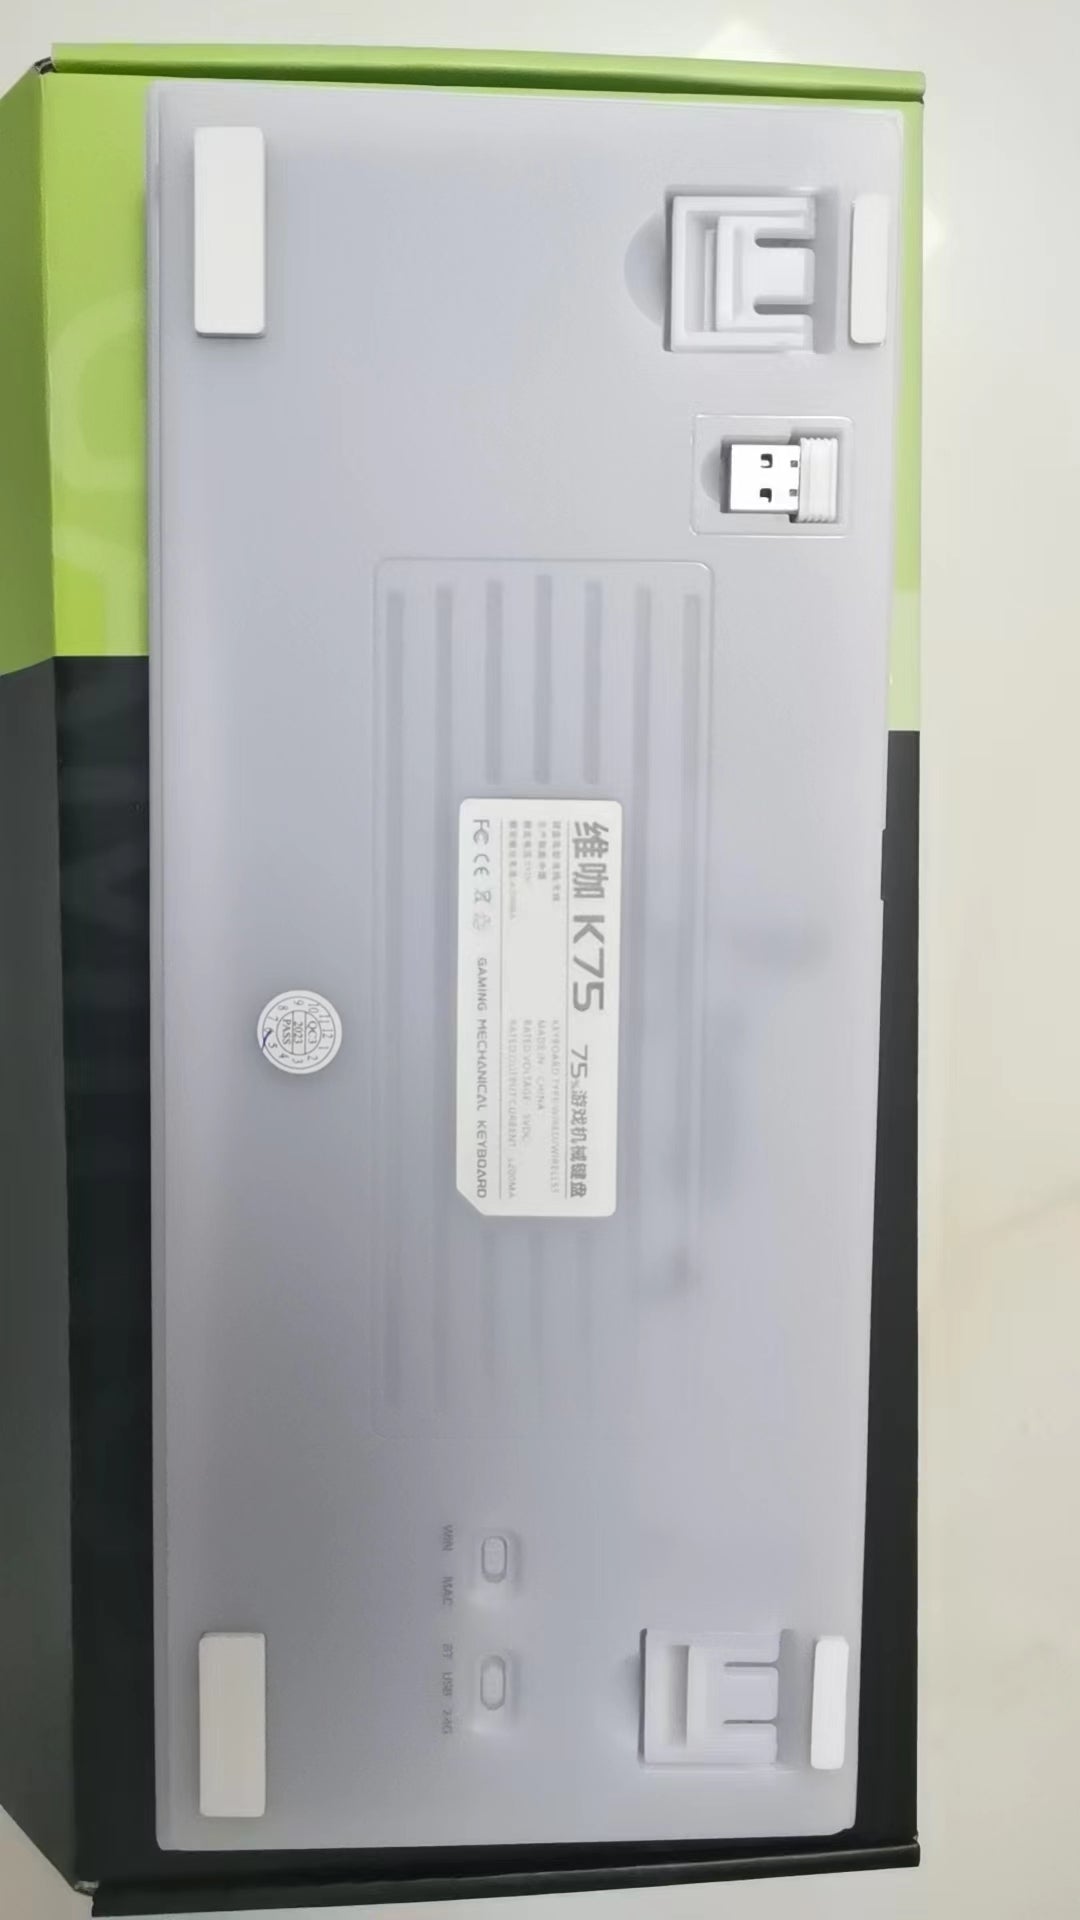 VIKA K75 Wireless RGB Mechanical Keyboard Kit with Screen